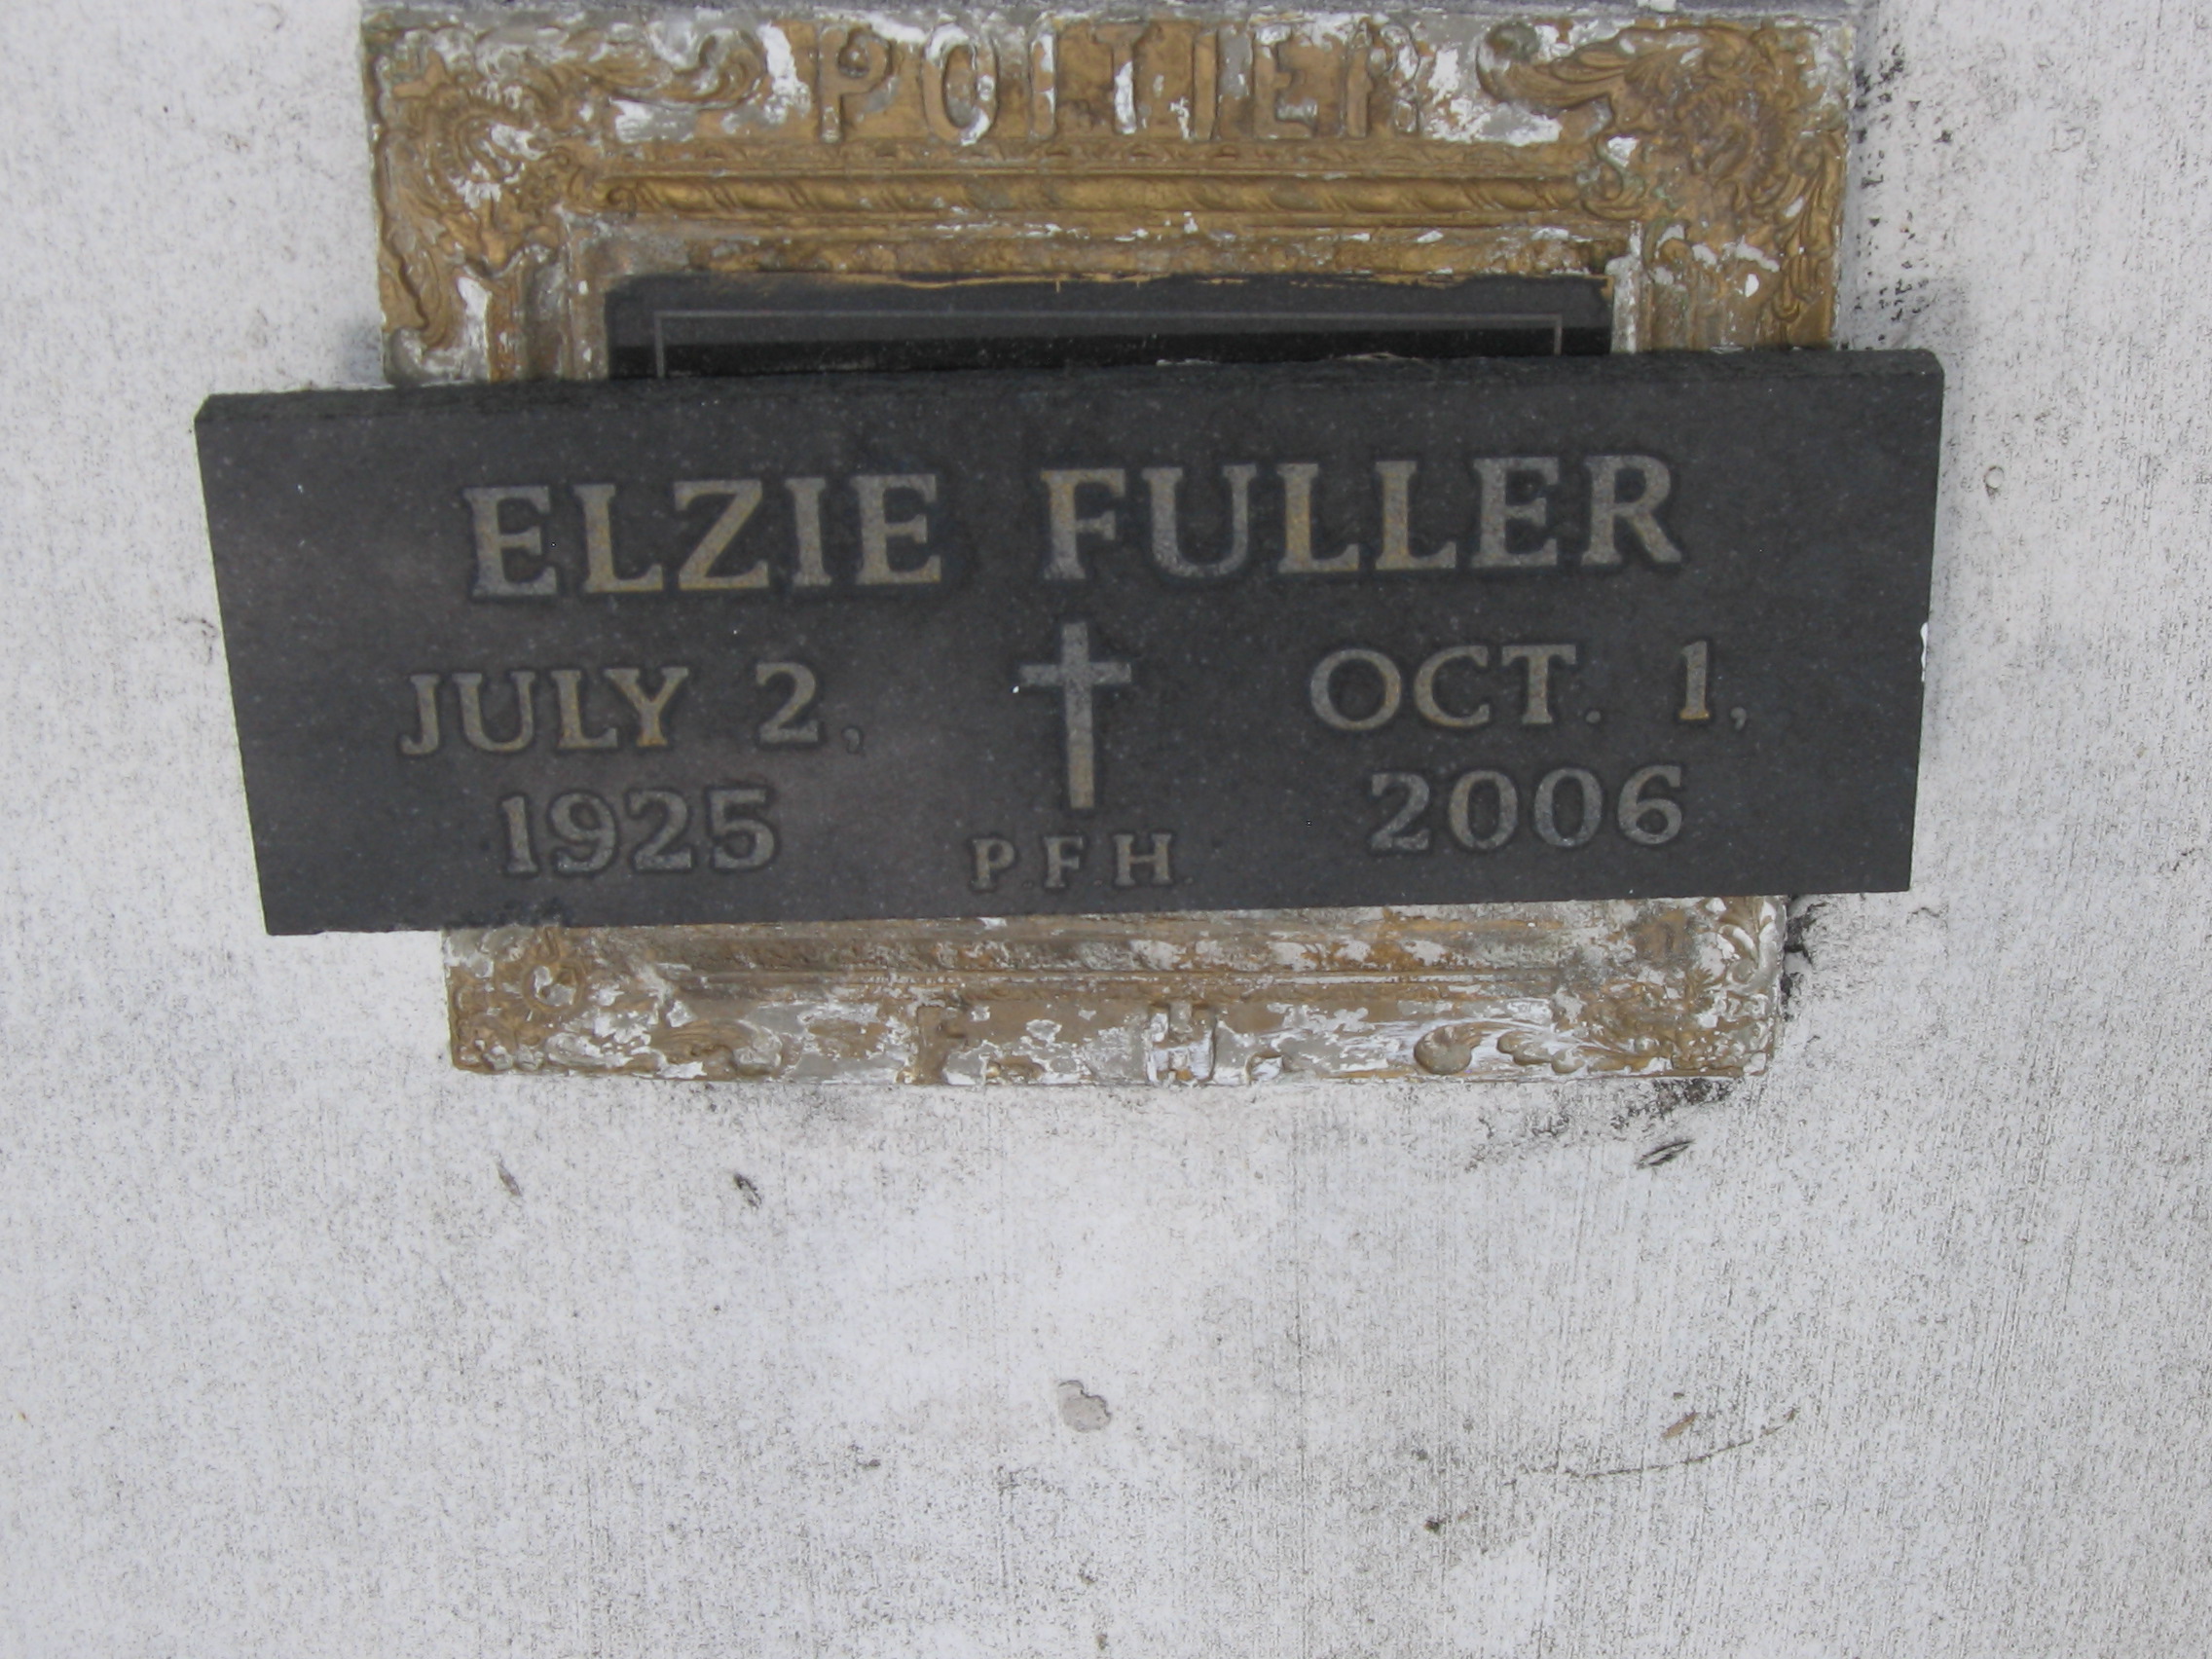 Elzie Fuller